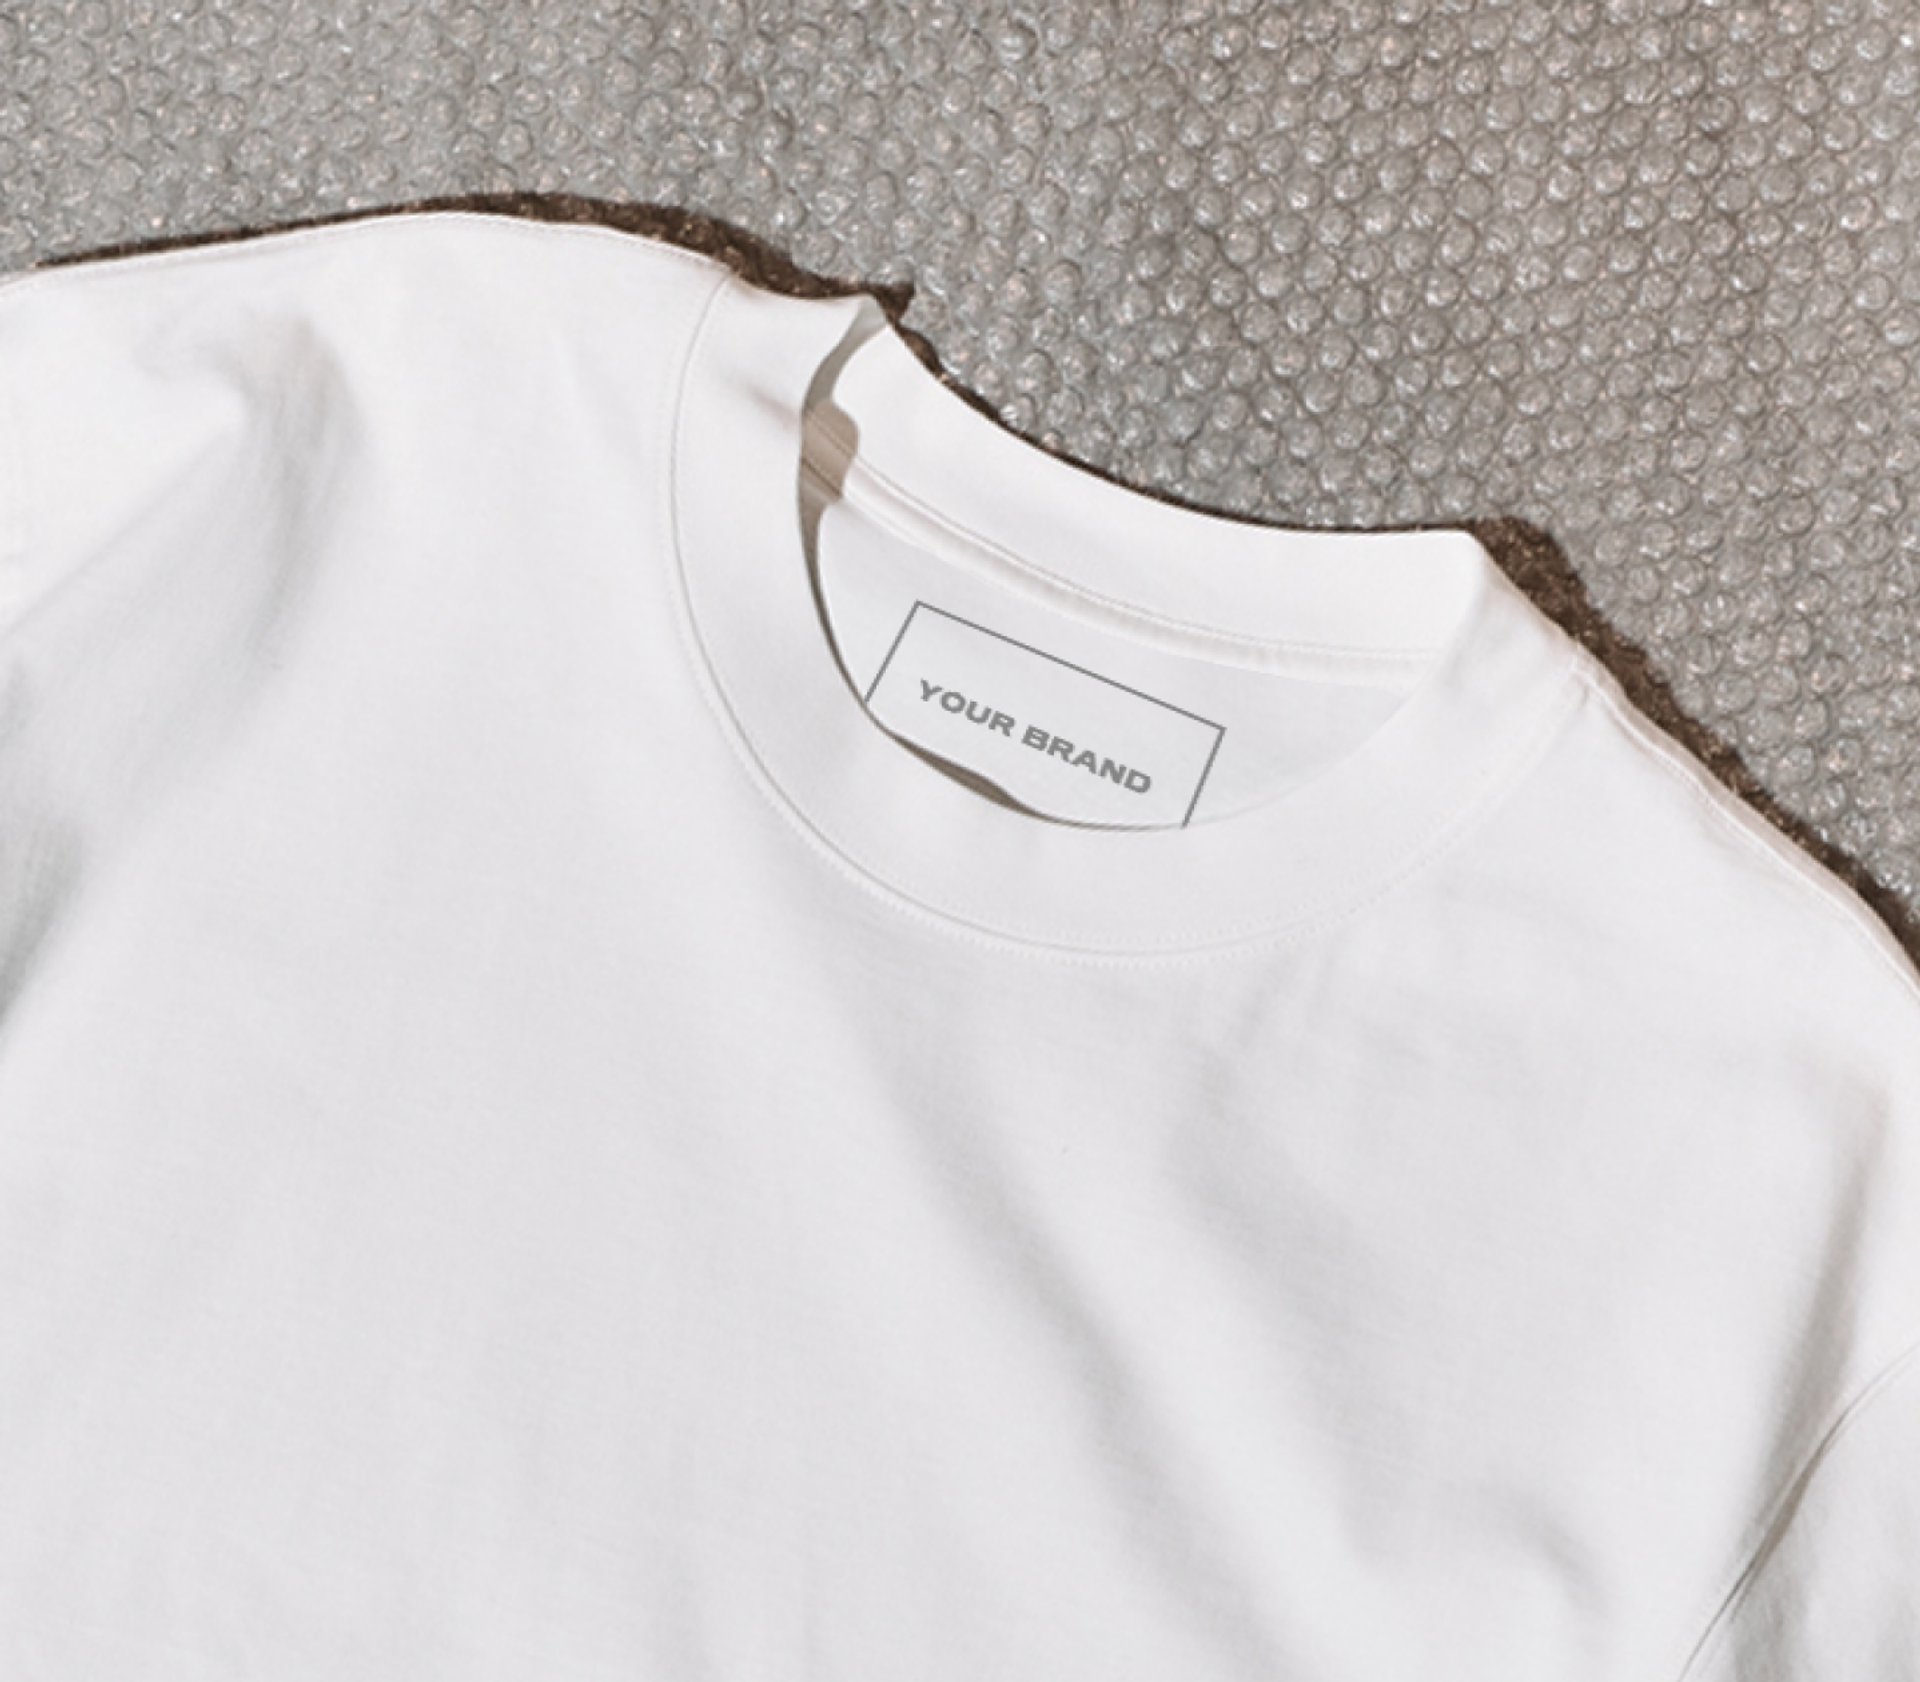 A Creator Studio white T-shirt